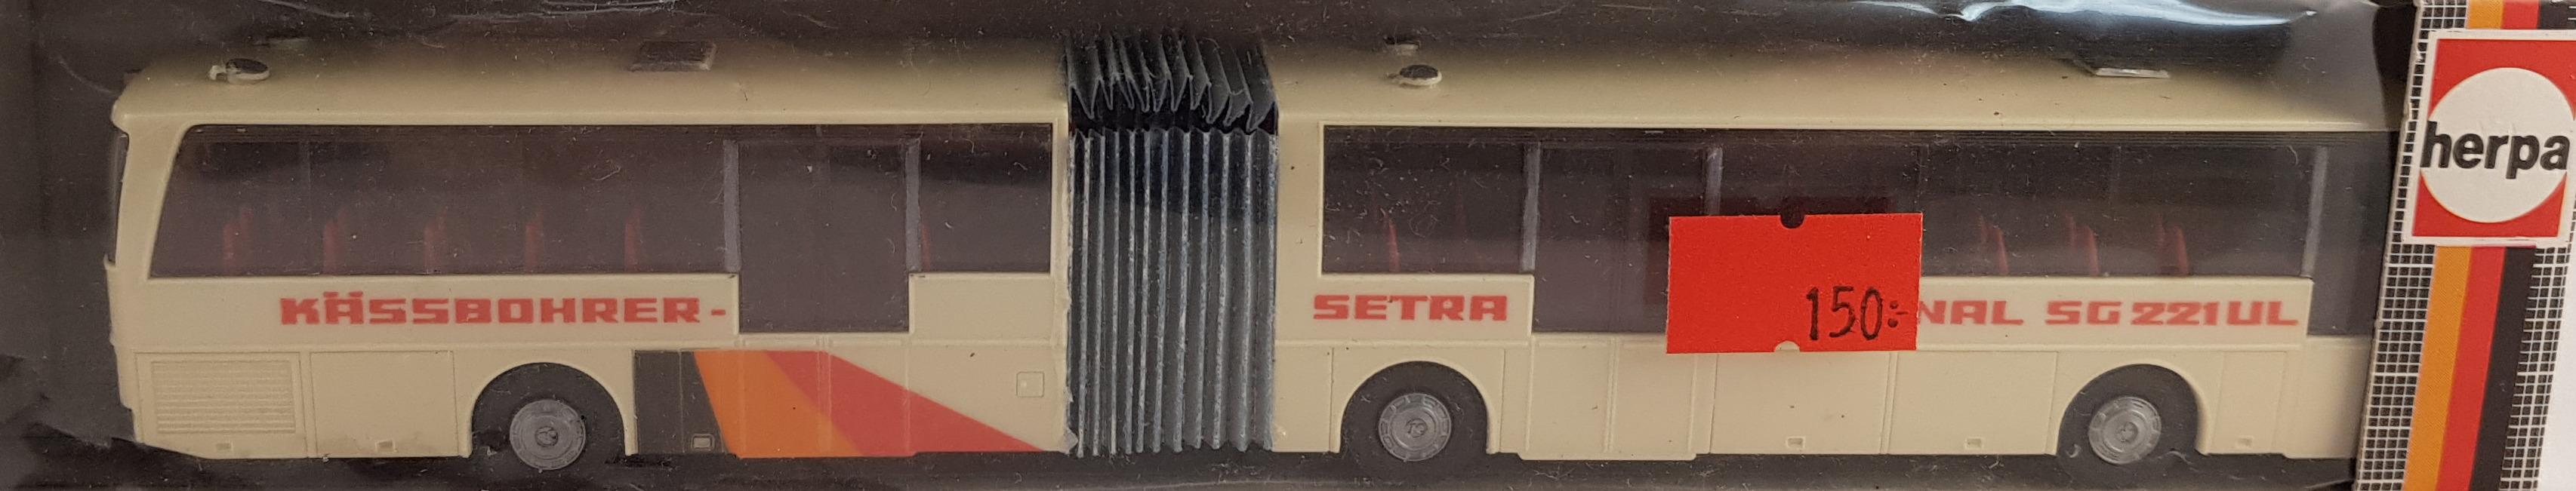 Herpa 832-461 Buss Setra SG221UL, skala H0, K8